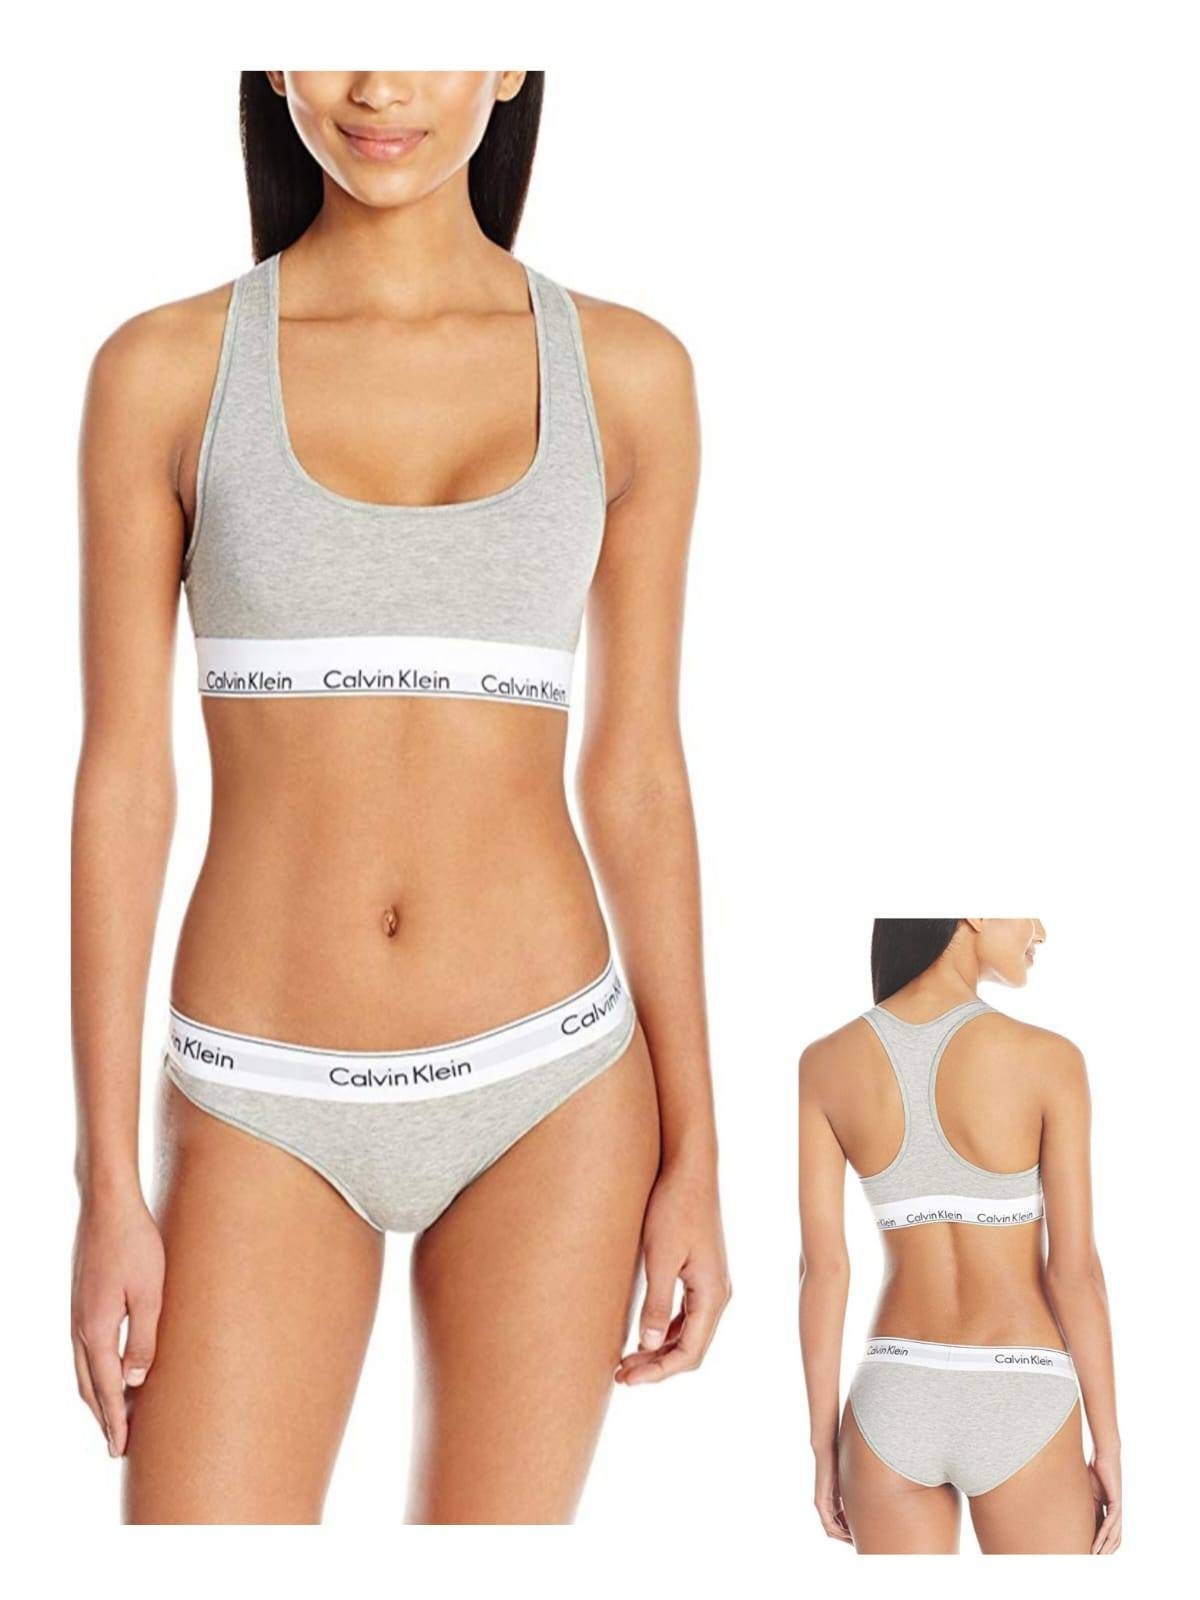 Aleefe - Calvin Klein Women's Modern Cotton bra panty set